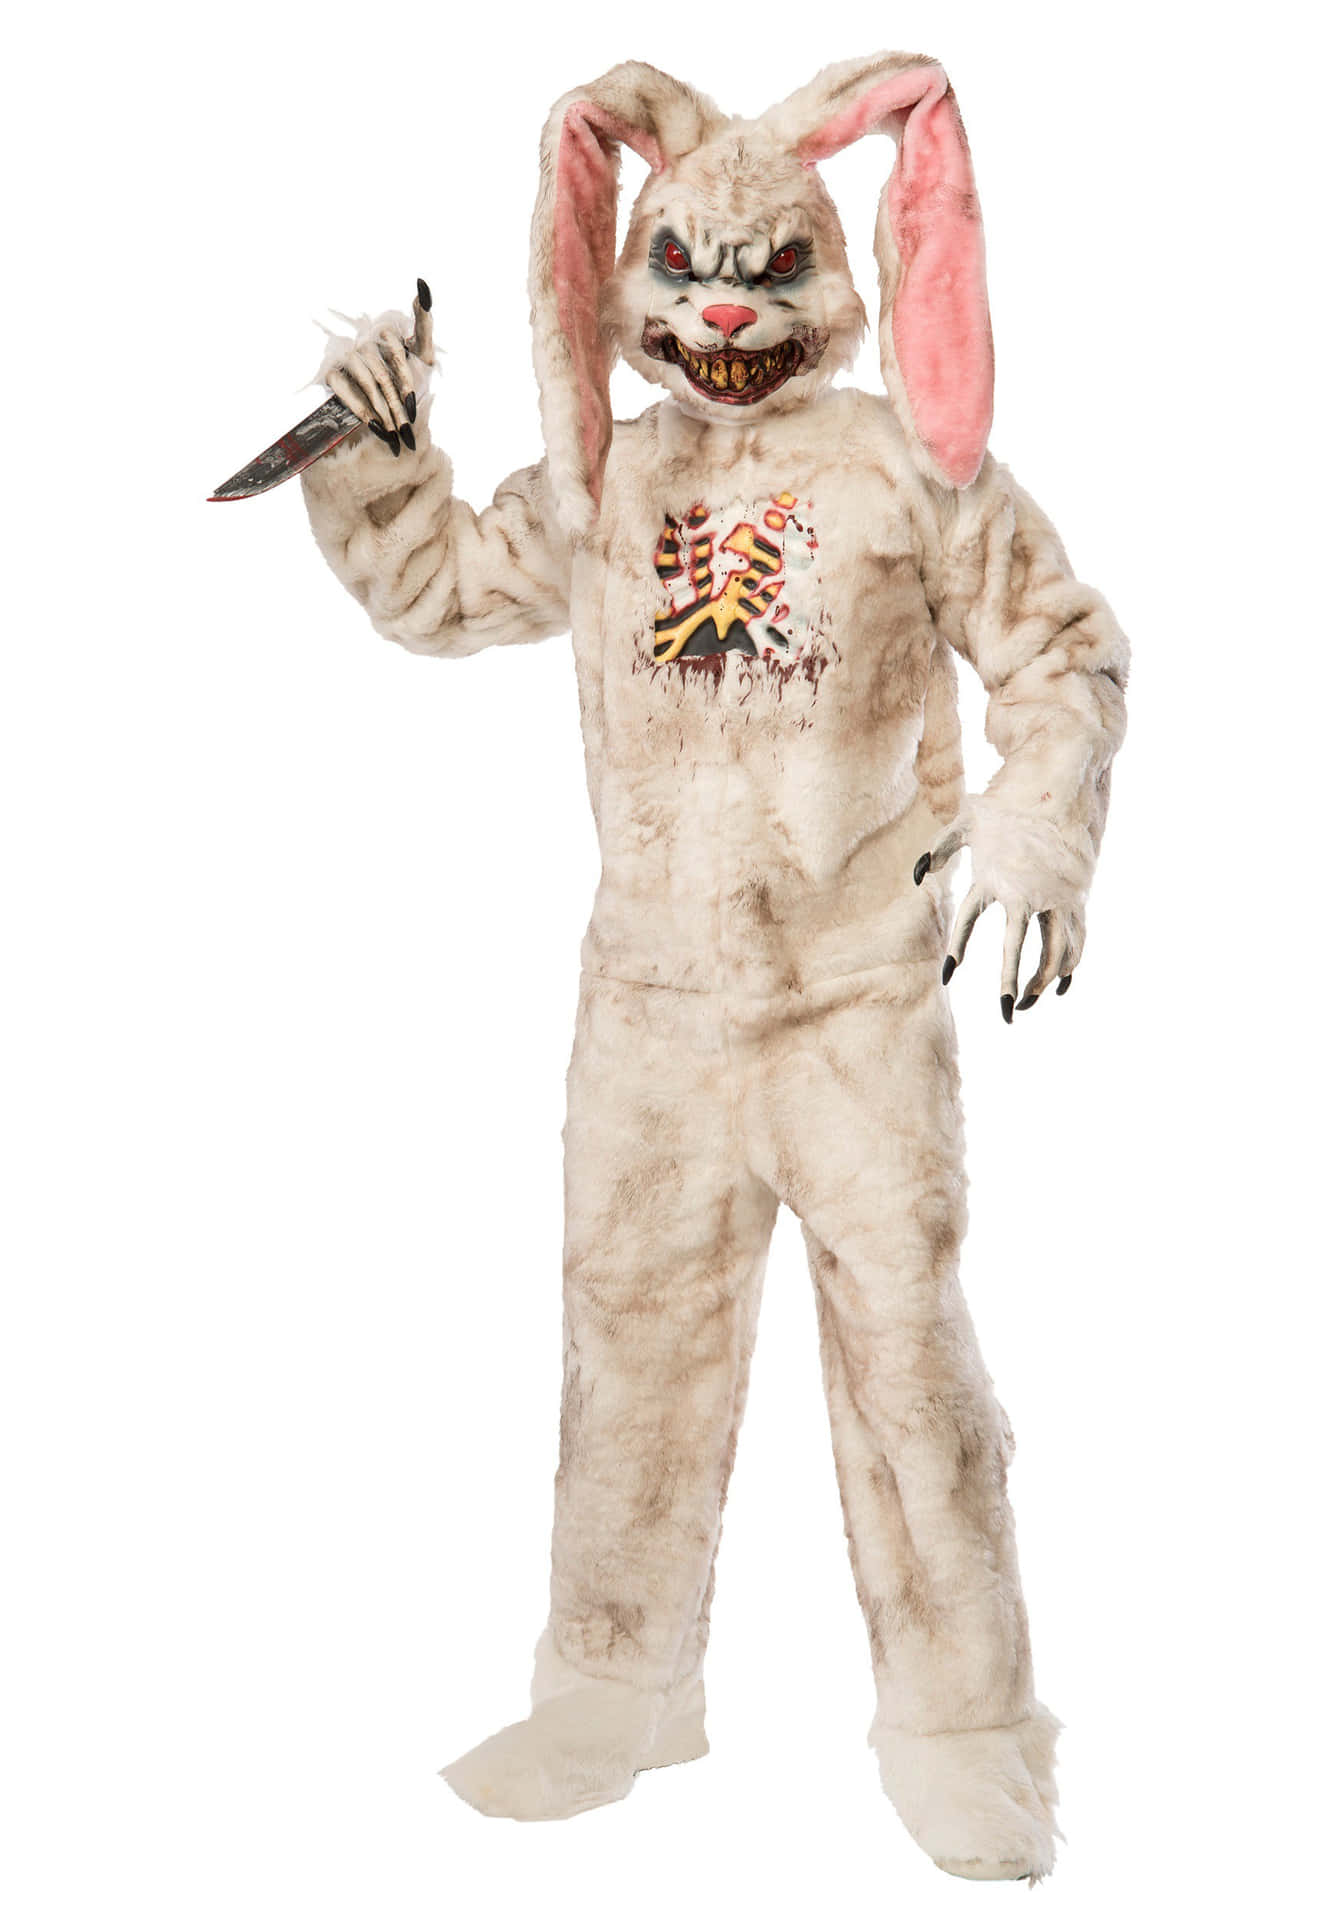 An unsettlingly creepy Easter Bunny!